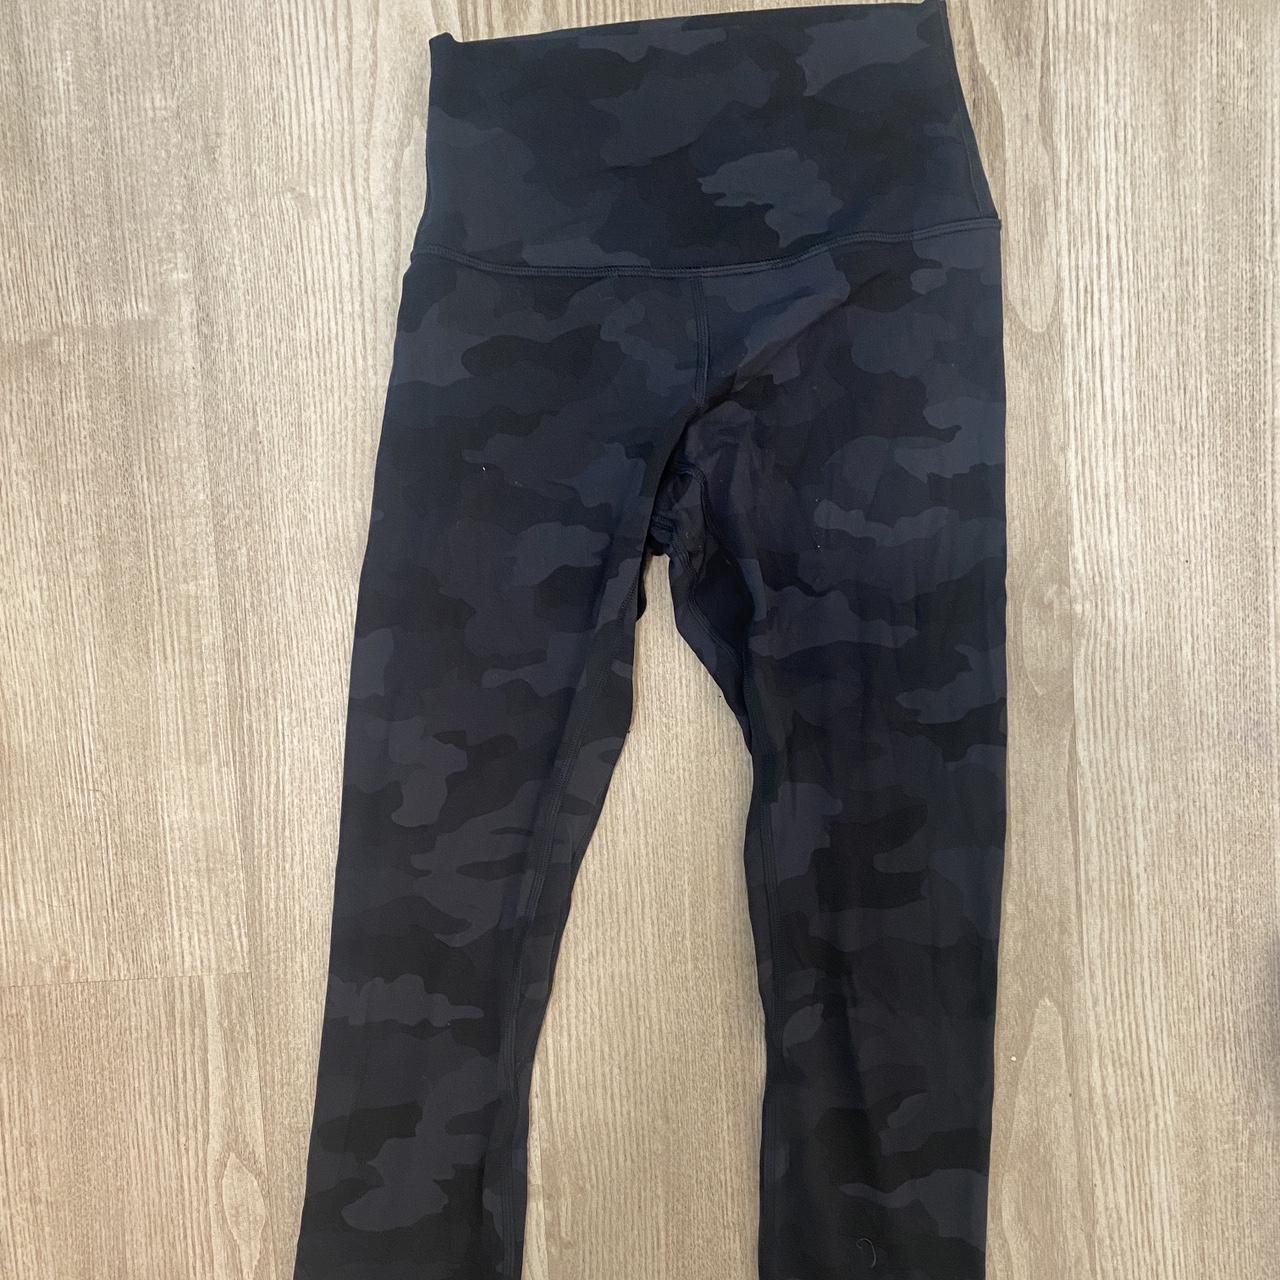 7/8 black camo lululemon leggings - Depop